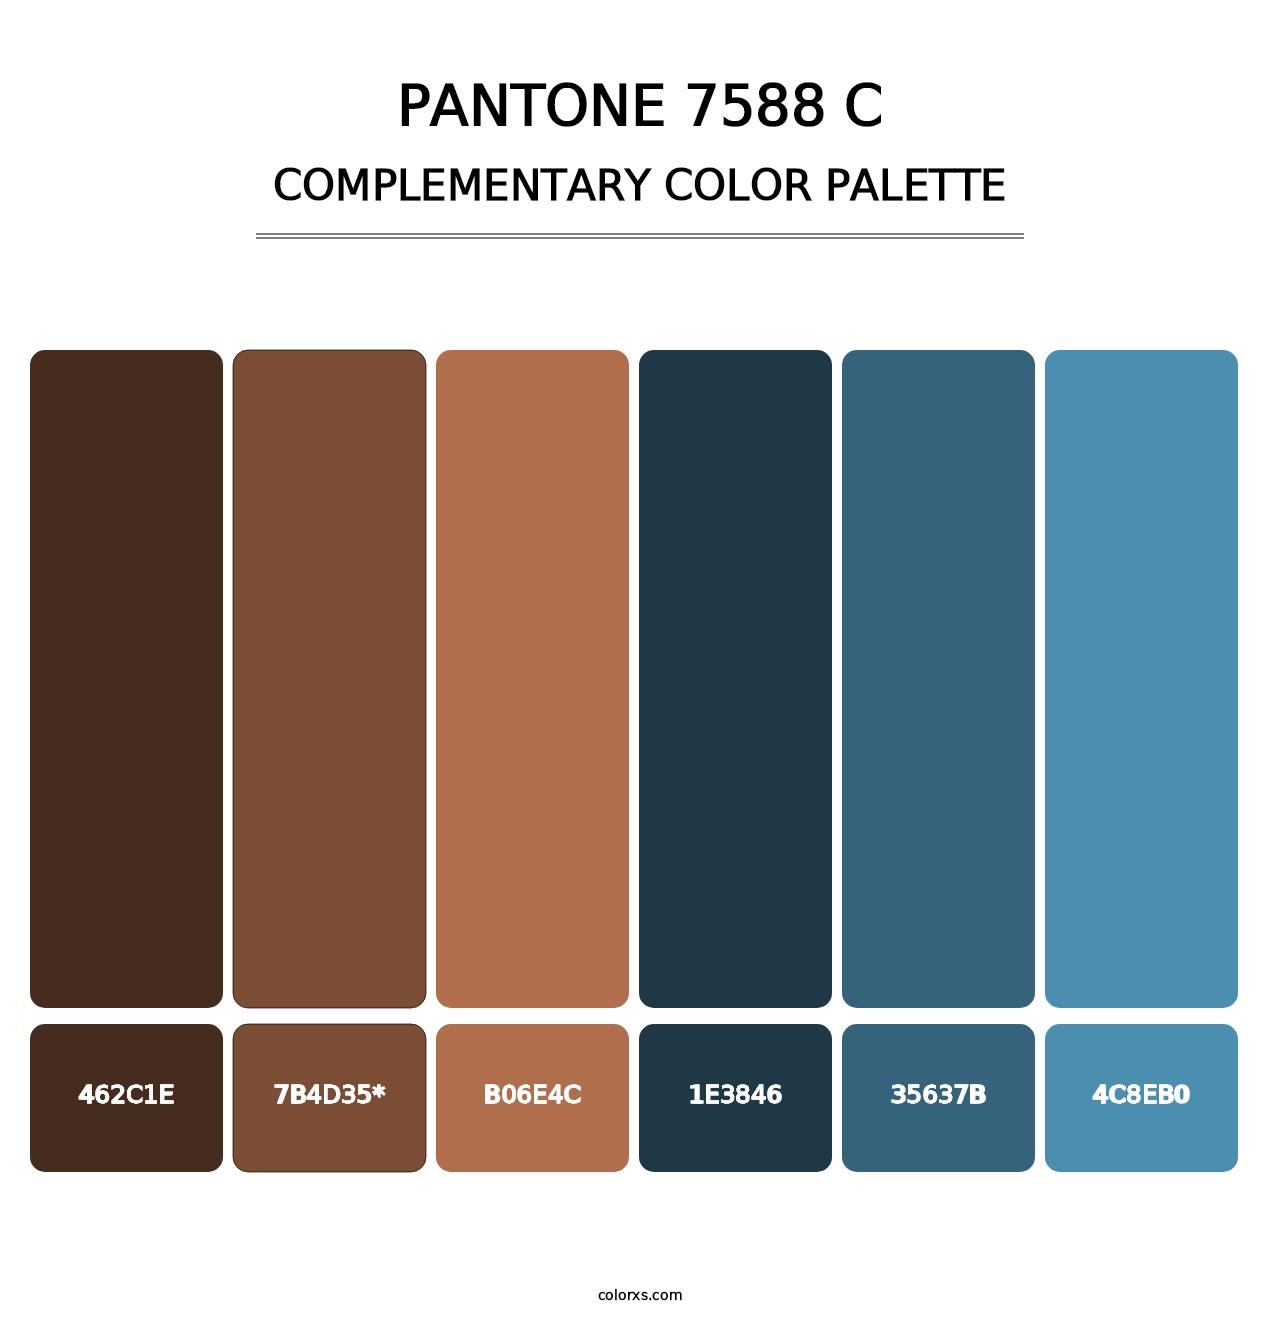 PANTONE 7588 C - Complementary Color Palette